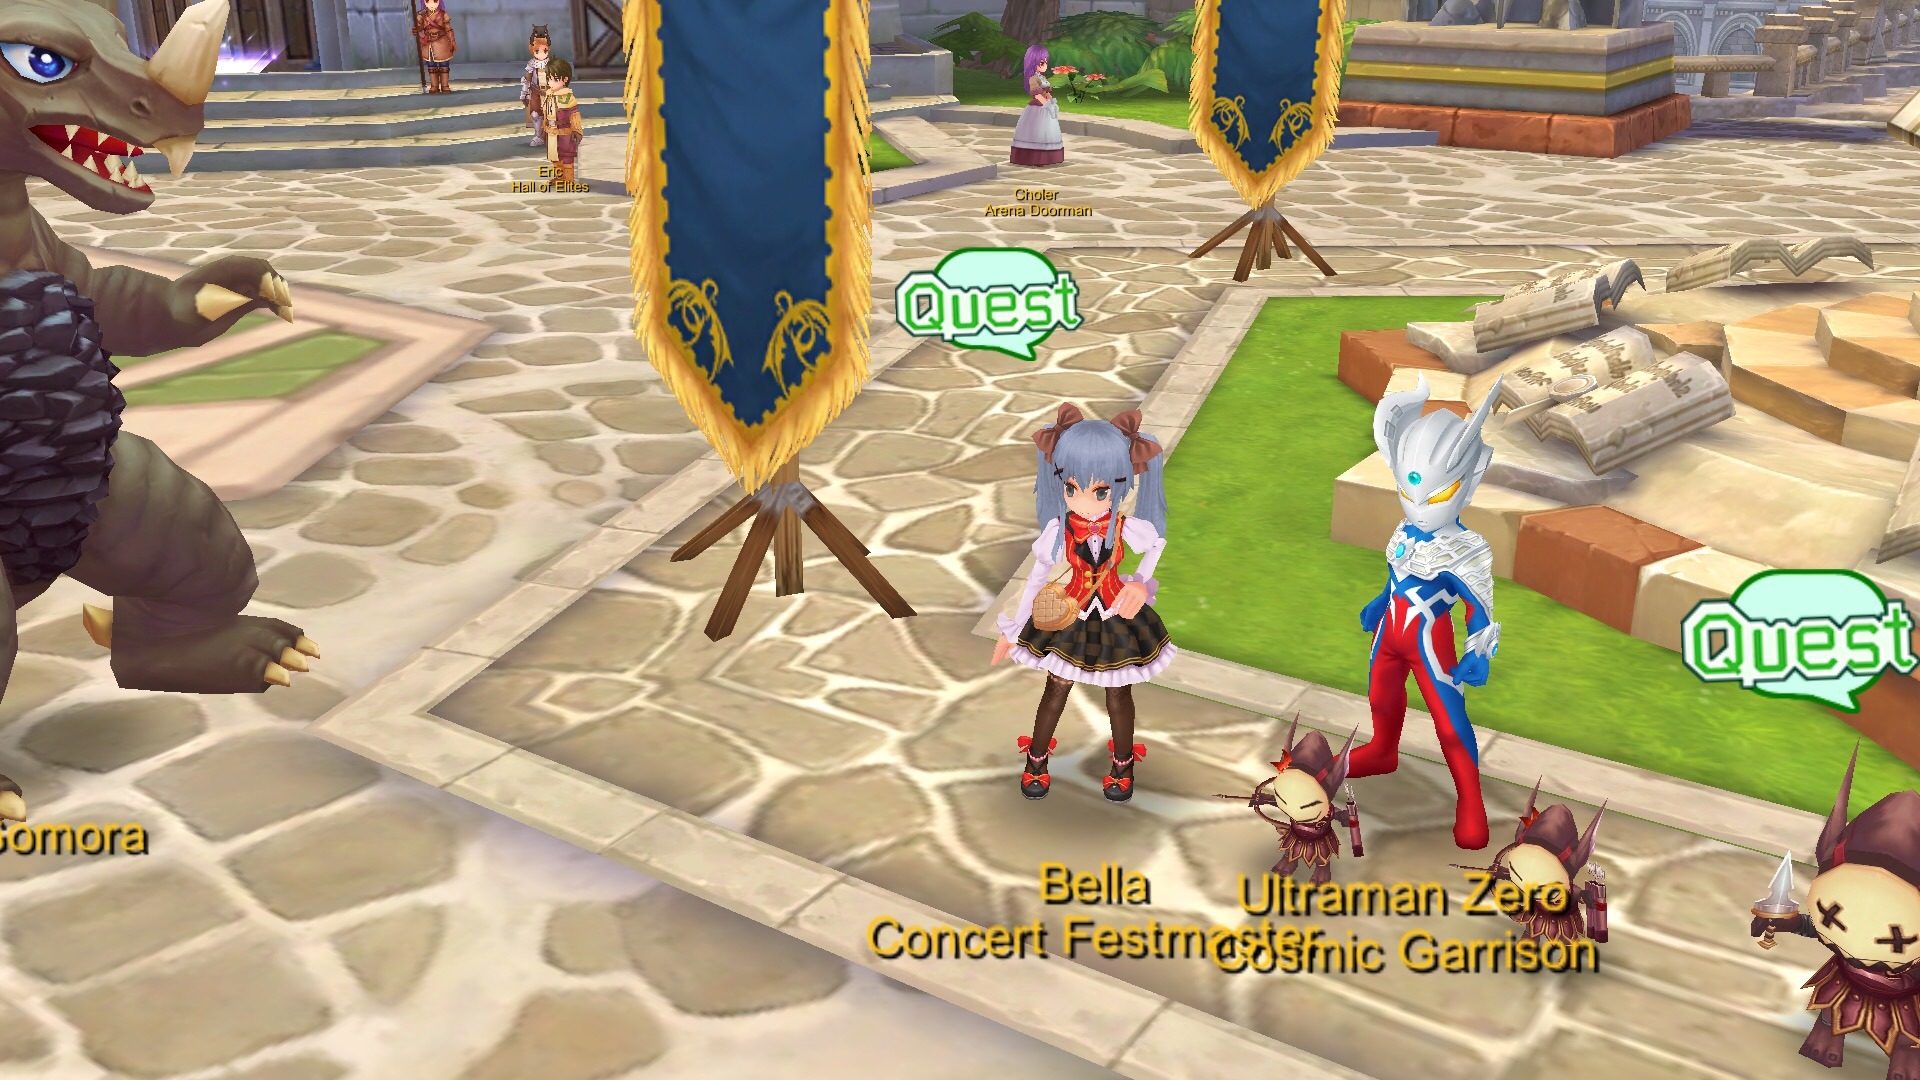 Bella Concert Feastmaster NPC for Voice Majesty quest plain